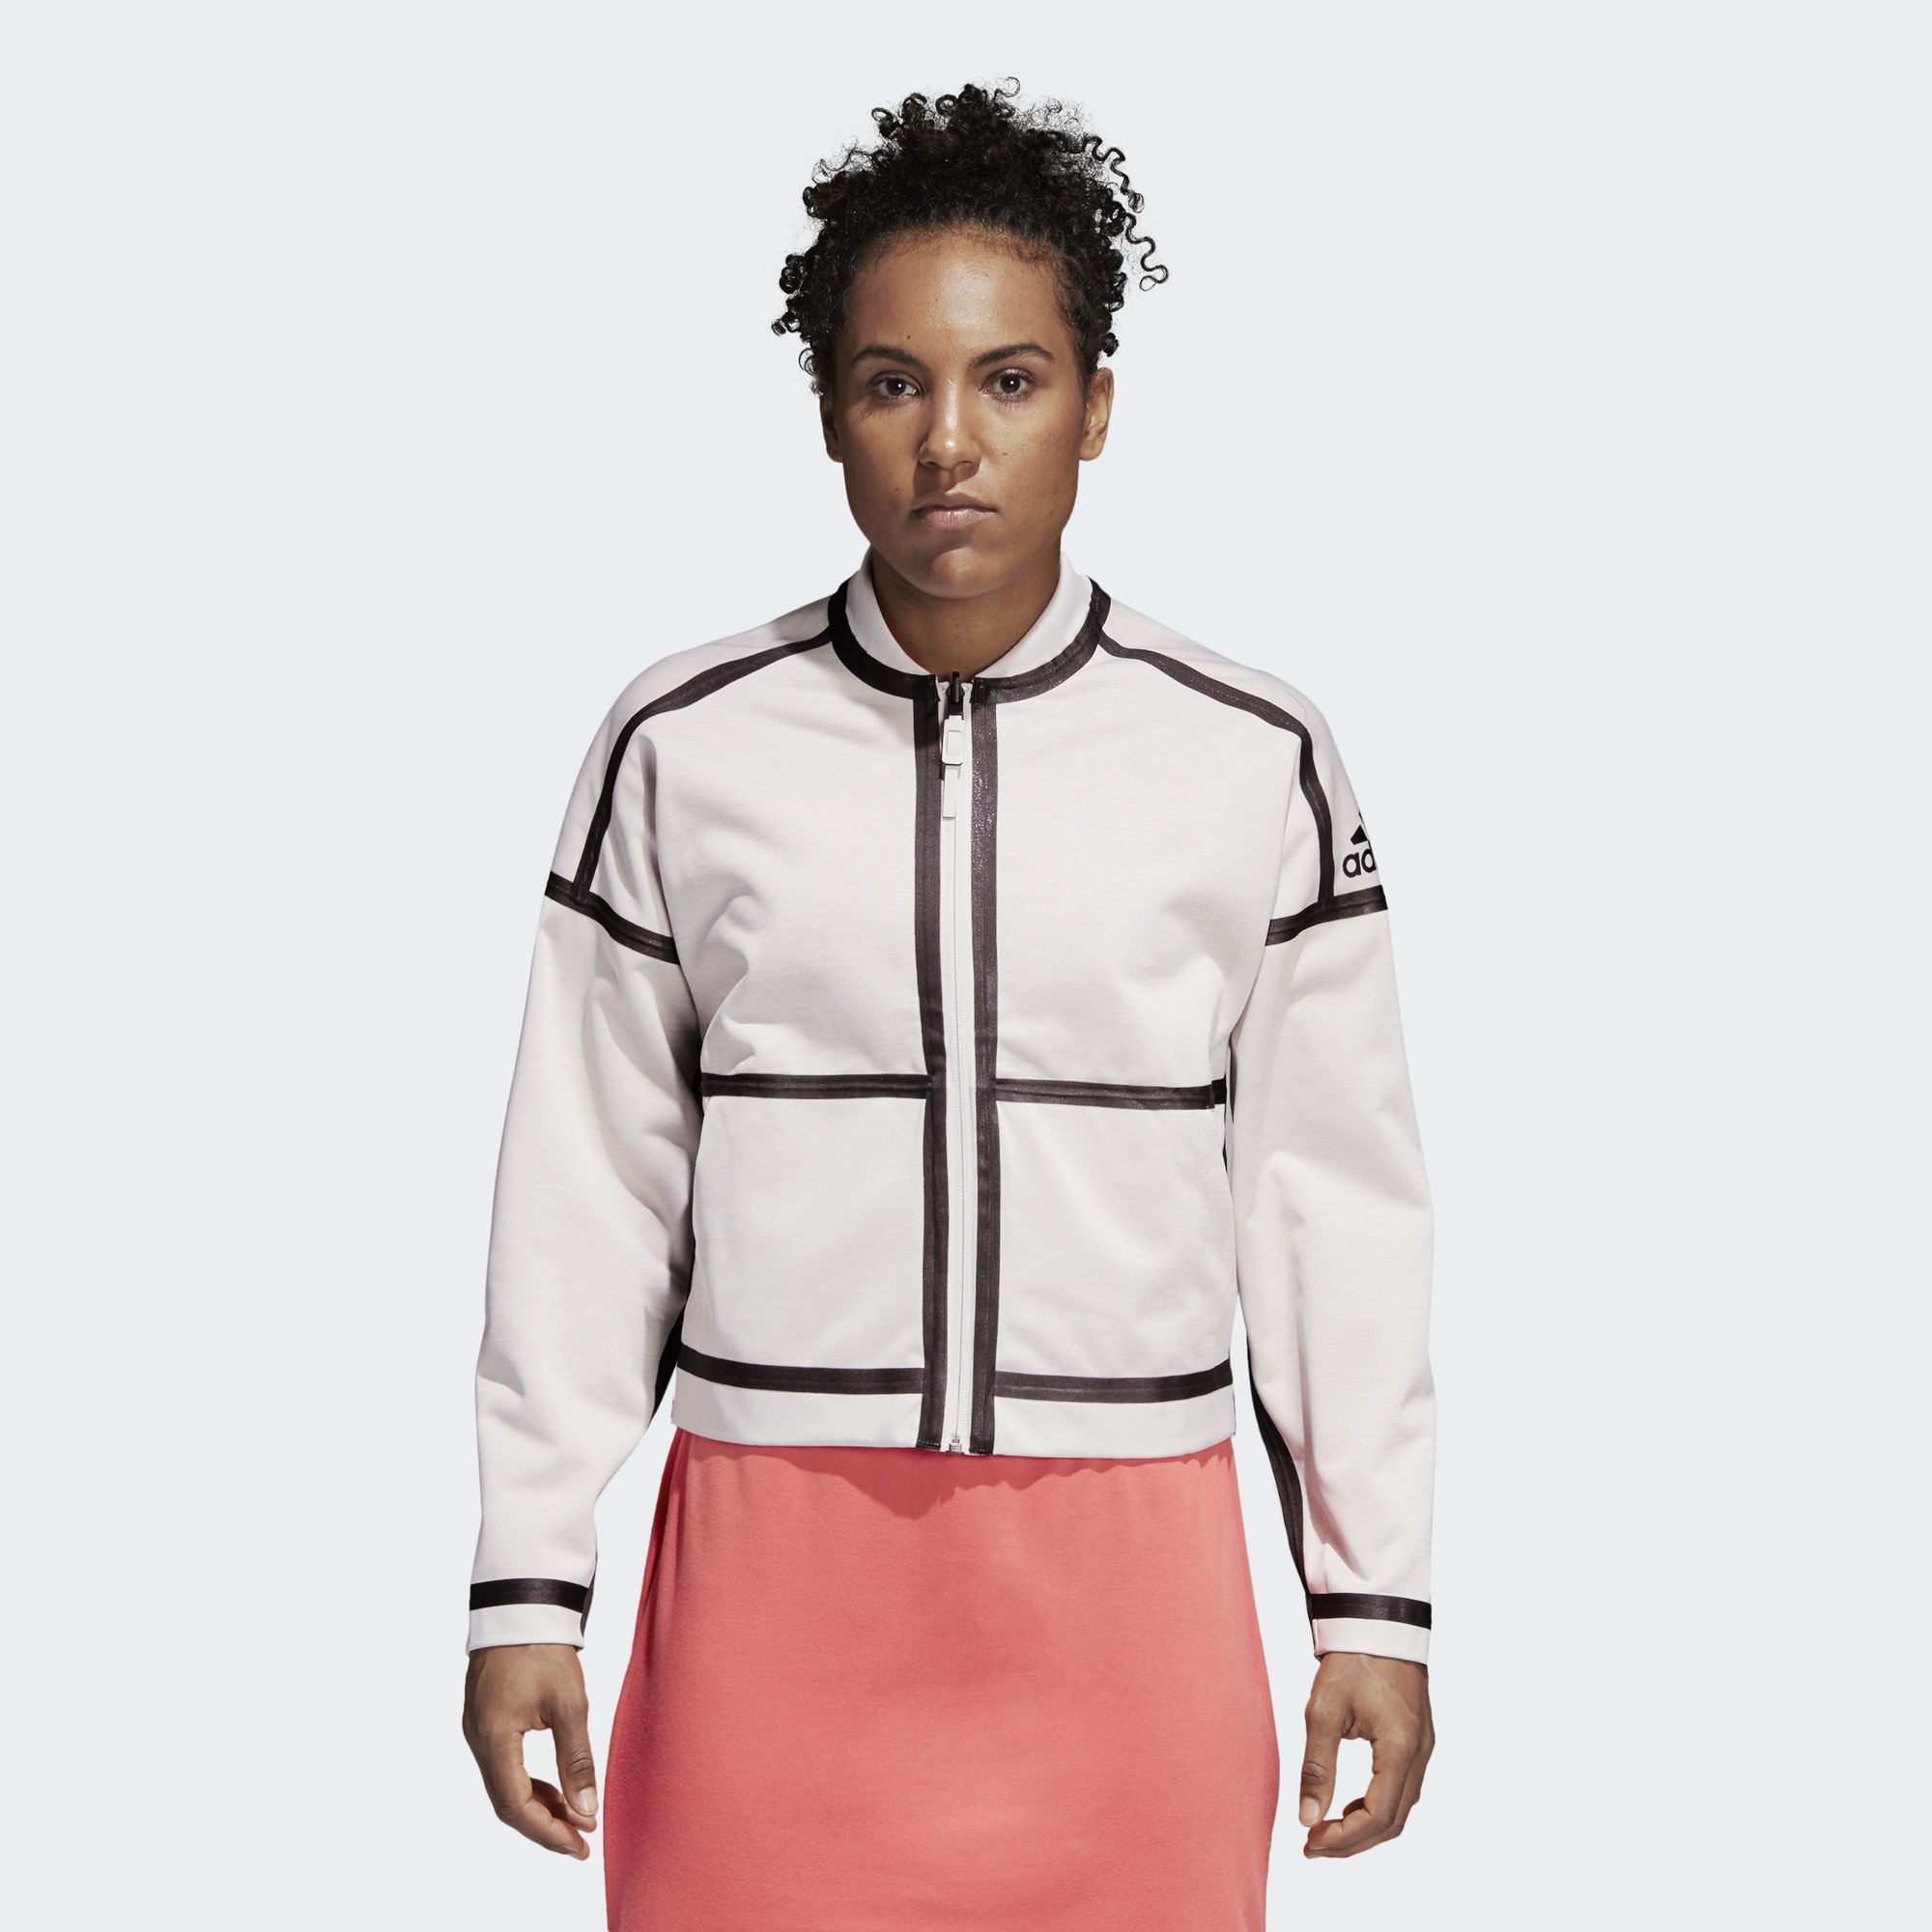 HotelomegaShops - Adidas Originals Women Reversible Jacket Rev White CF1465 (Fast - f33729 sneakers outlet women